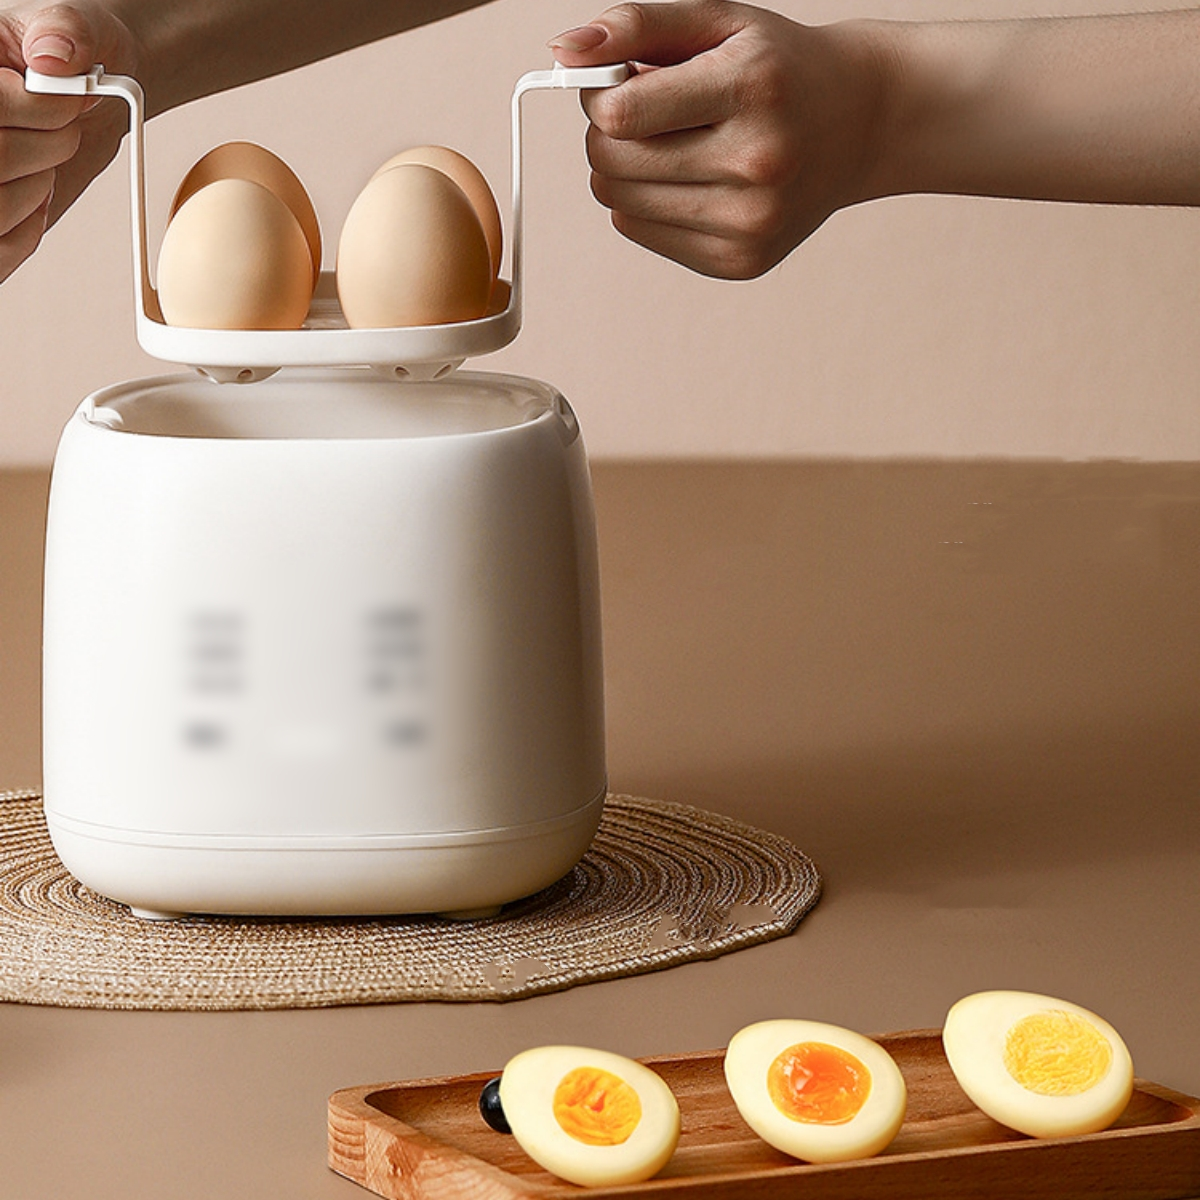 Eier: Eierkocher mit Gesunde Köstlichkeiten 6 4) SHAOKE Eierkocher(Anzahl Modi